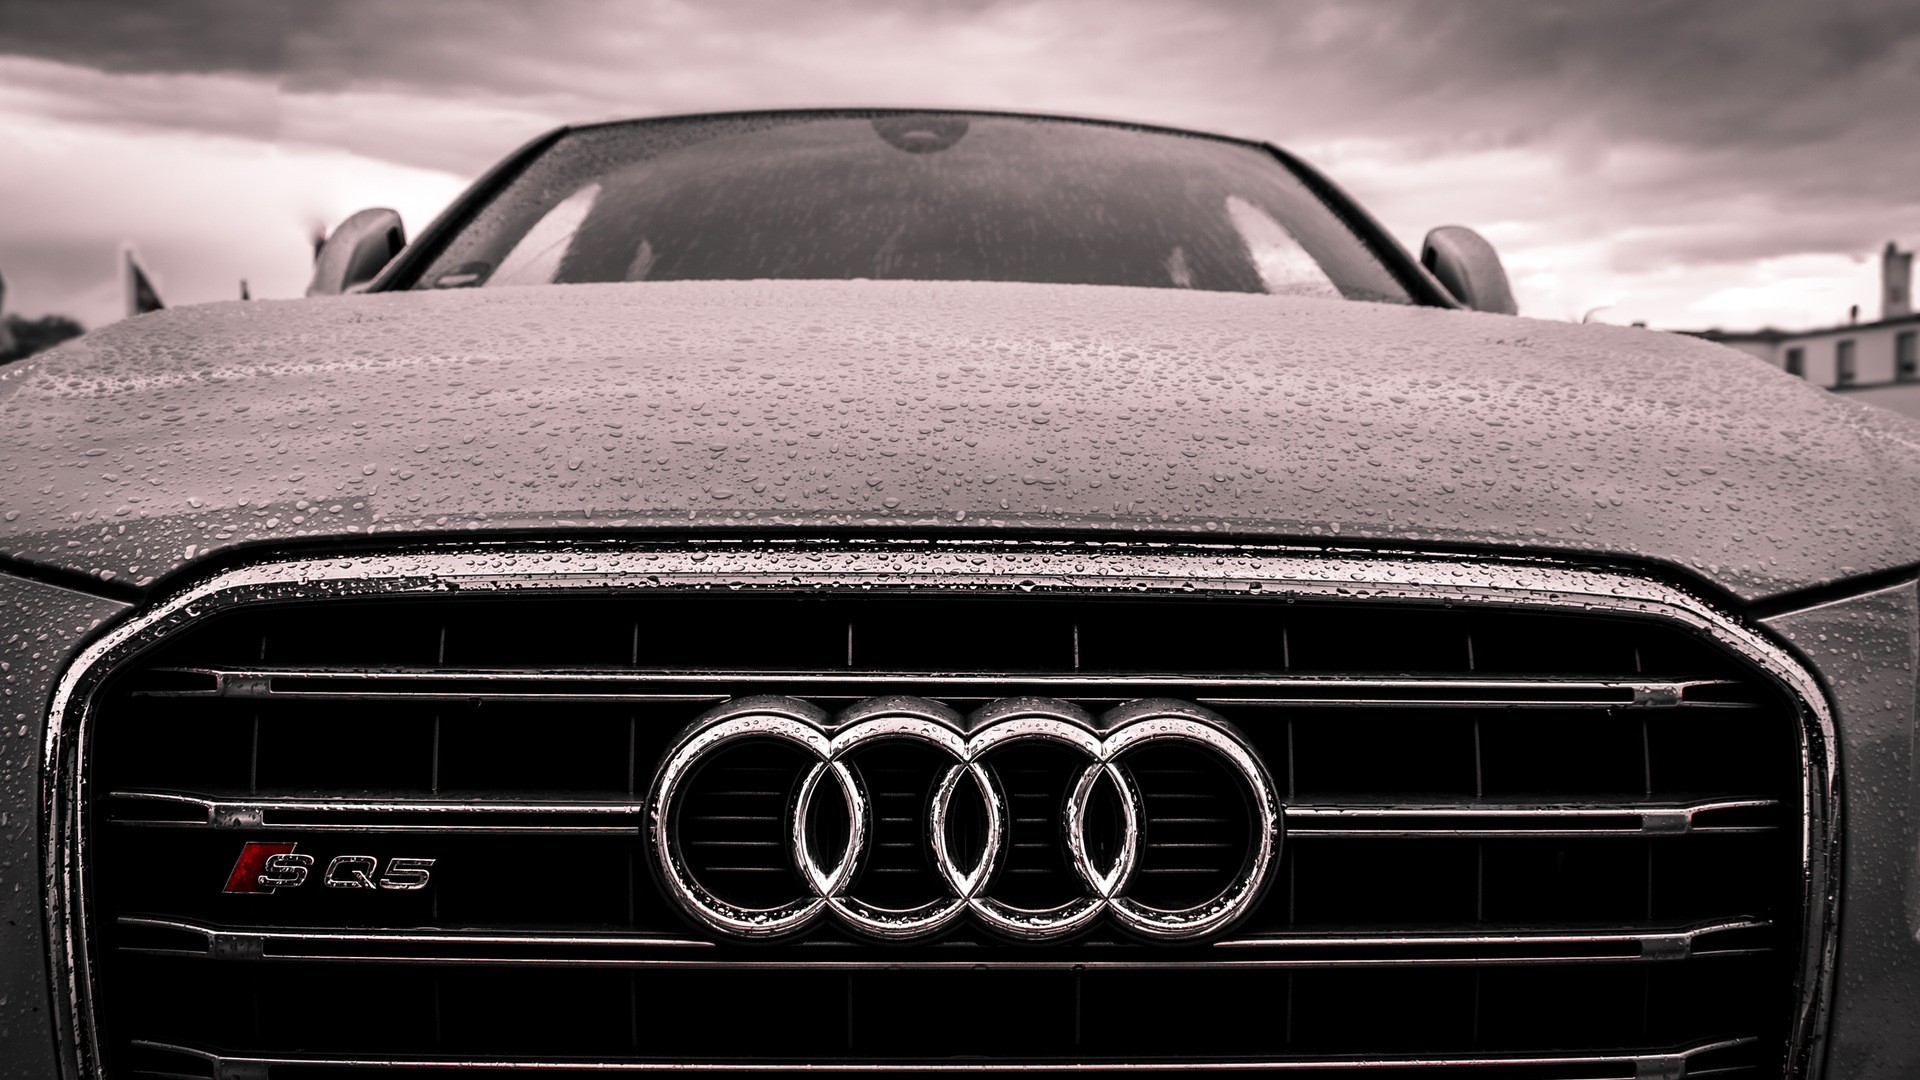 vehicle, Car, Audi, Vehicle front, Water drops, Clouds, Rain, Audi SQ5 Wallpaper